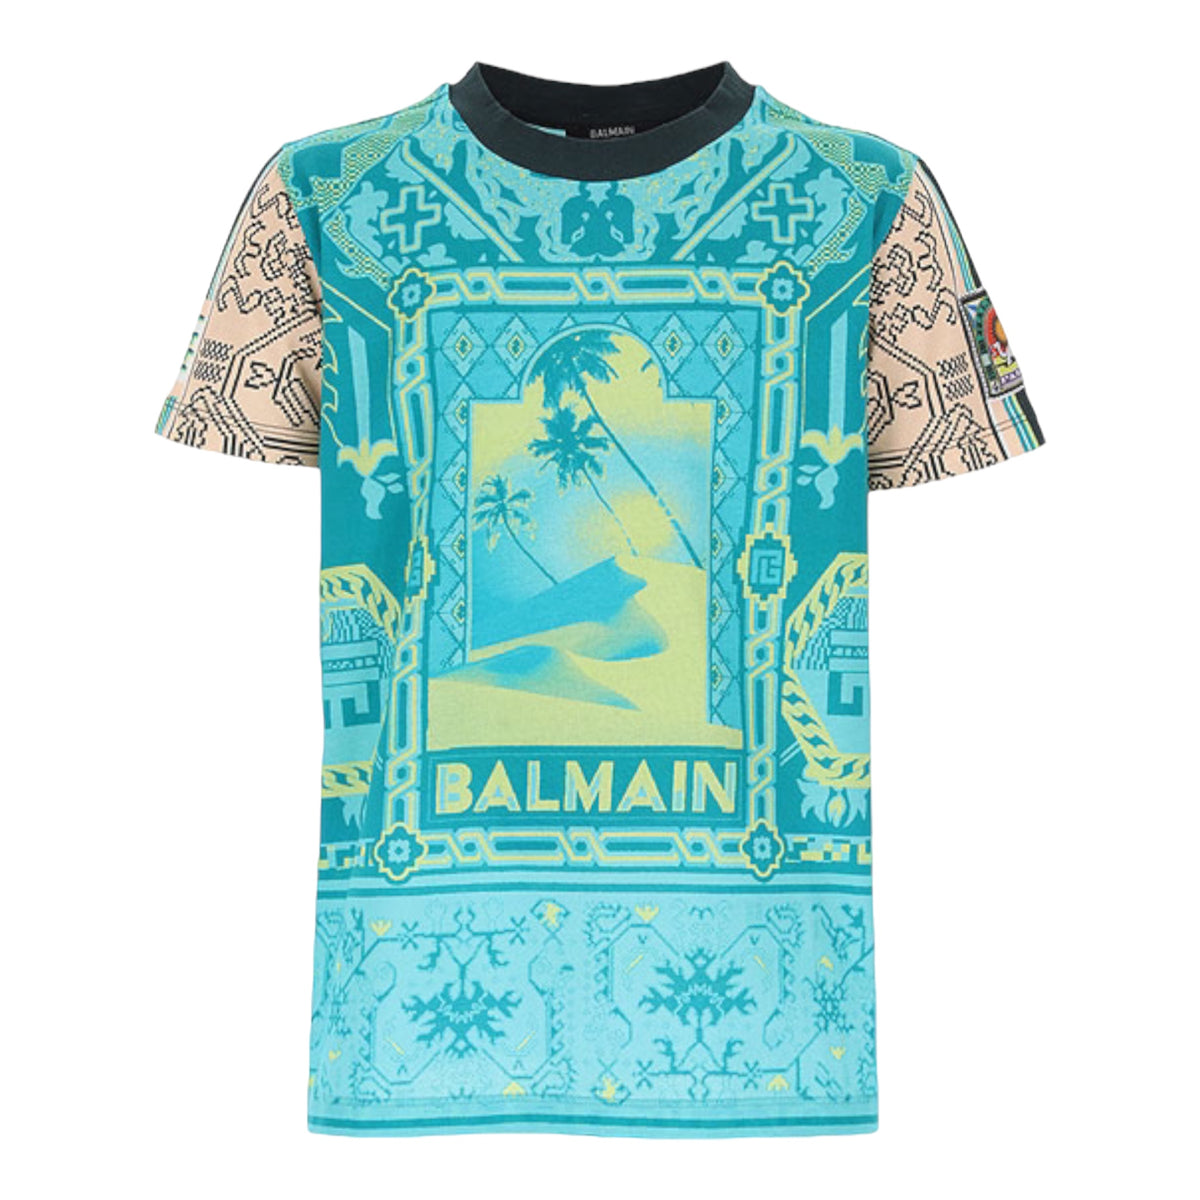 Balmain Kid's All Over Print Graphic T-Shirt